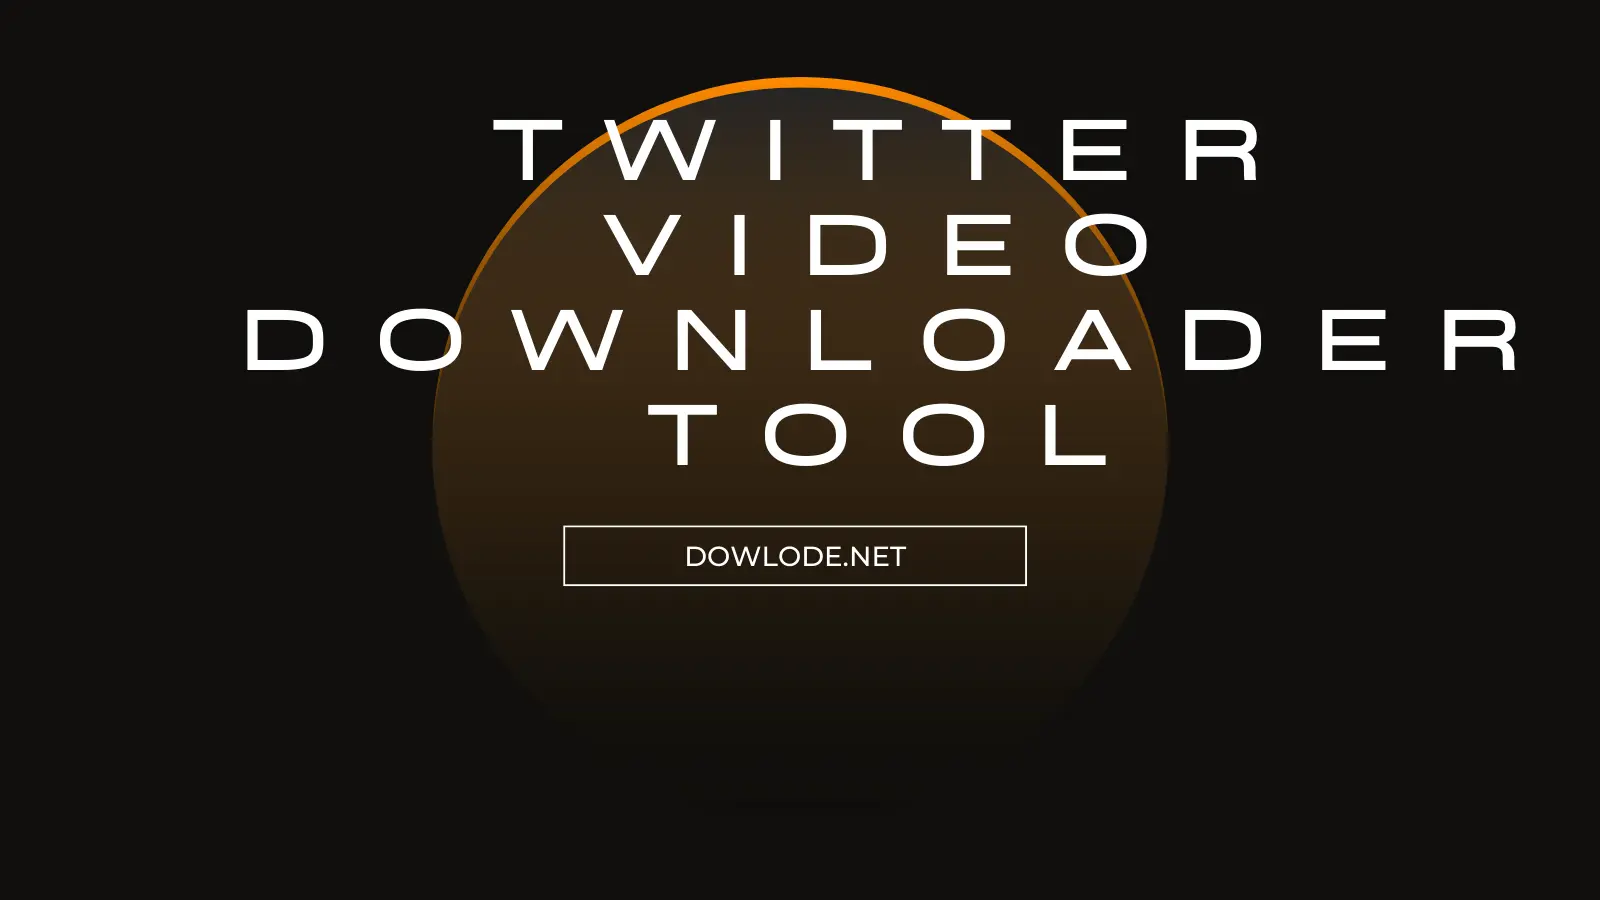 Twitter Video Download Tools